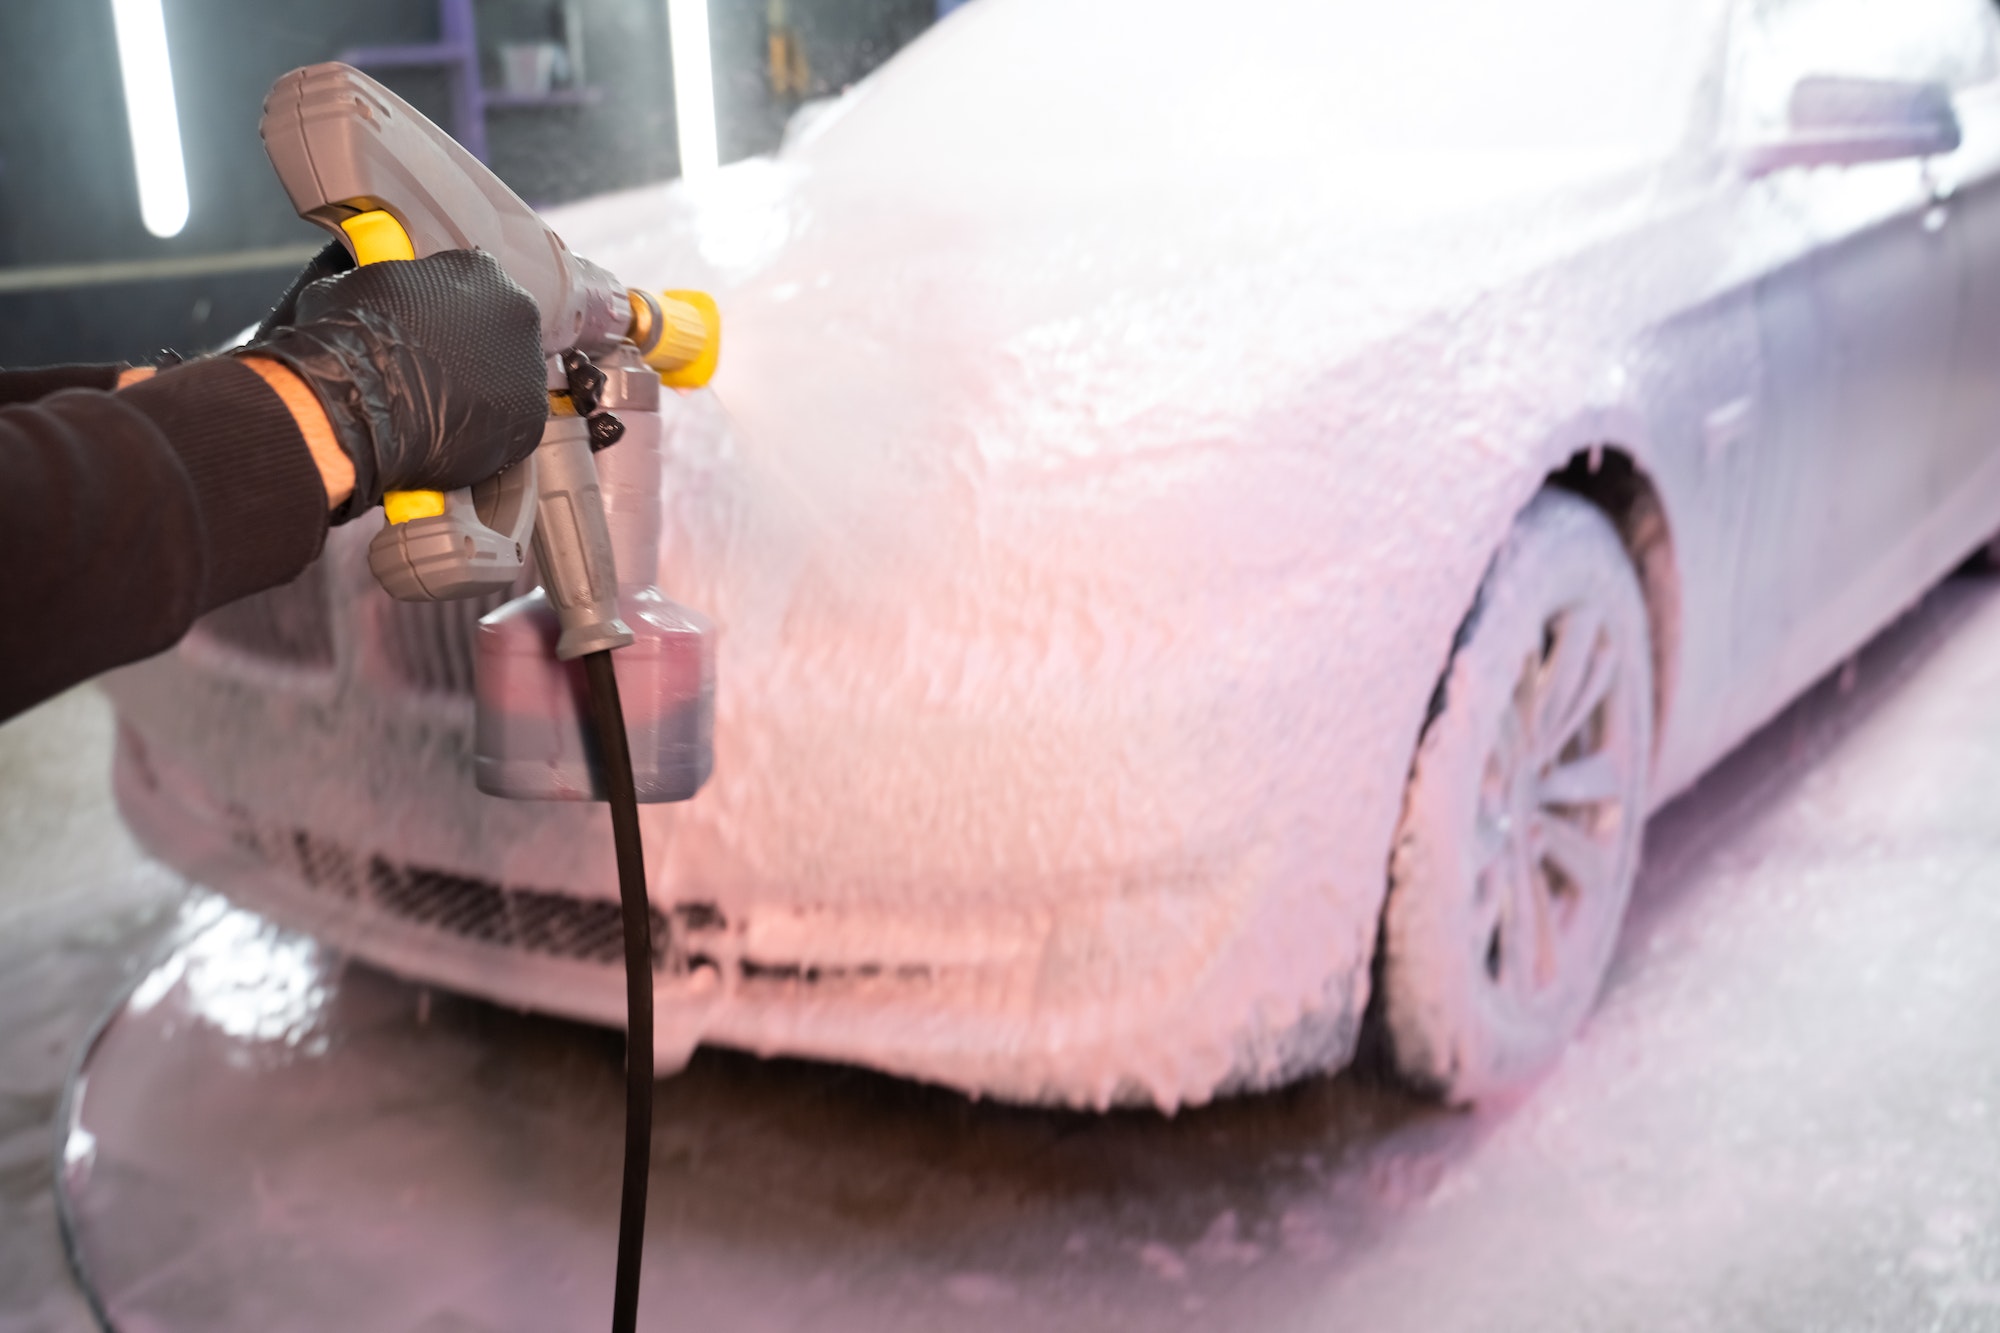 Car wash employee applies foam to the car. Professional auto wash